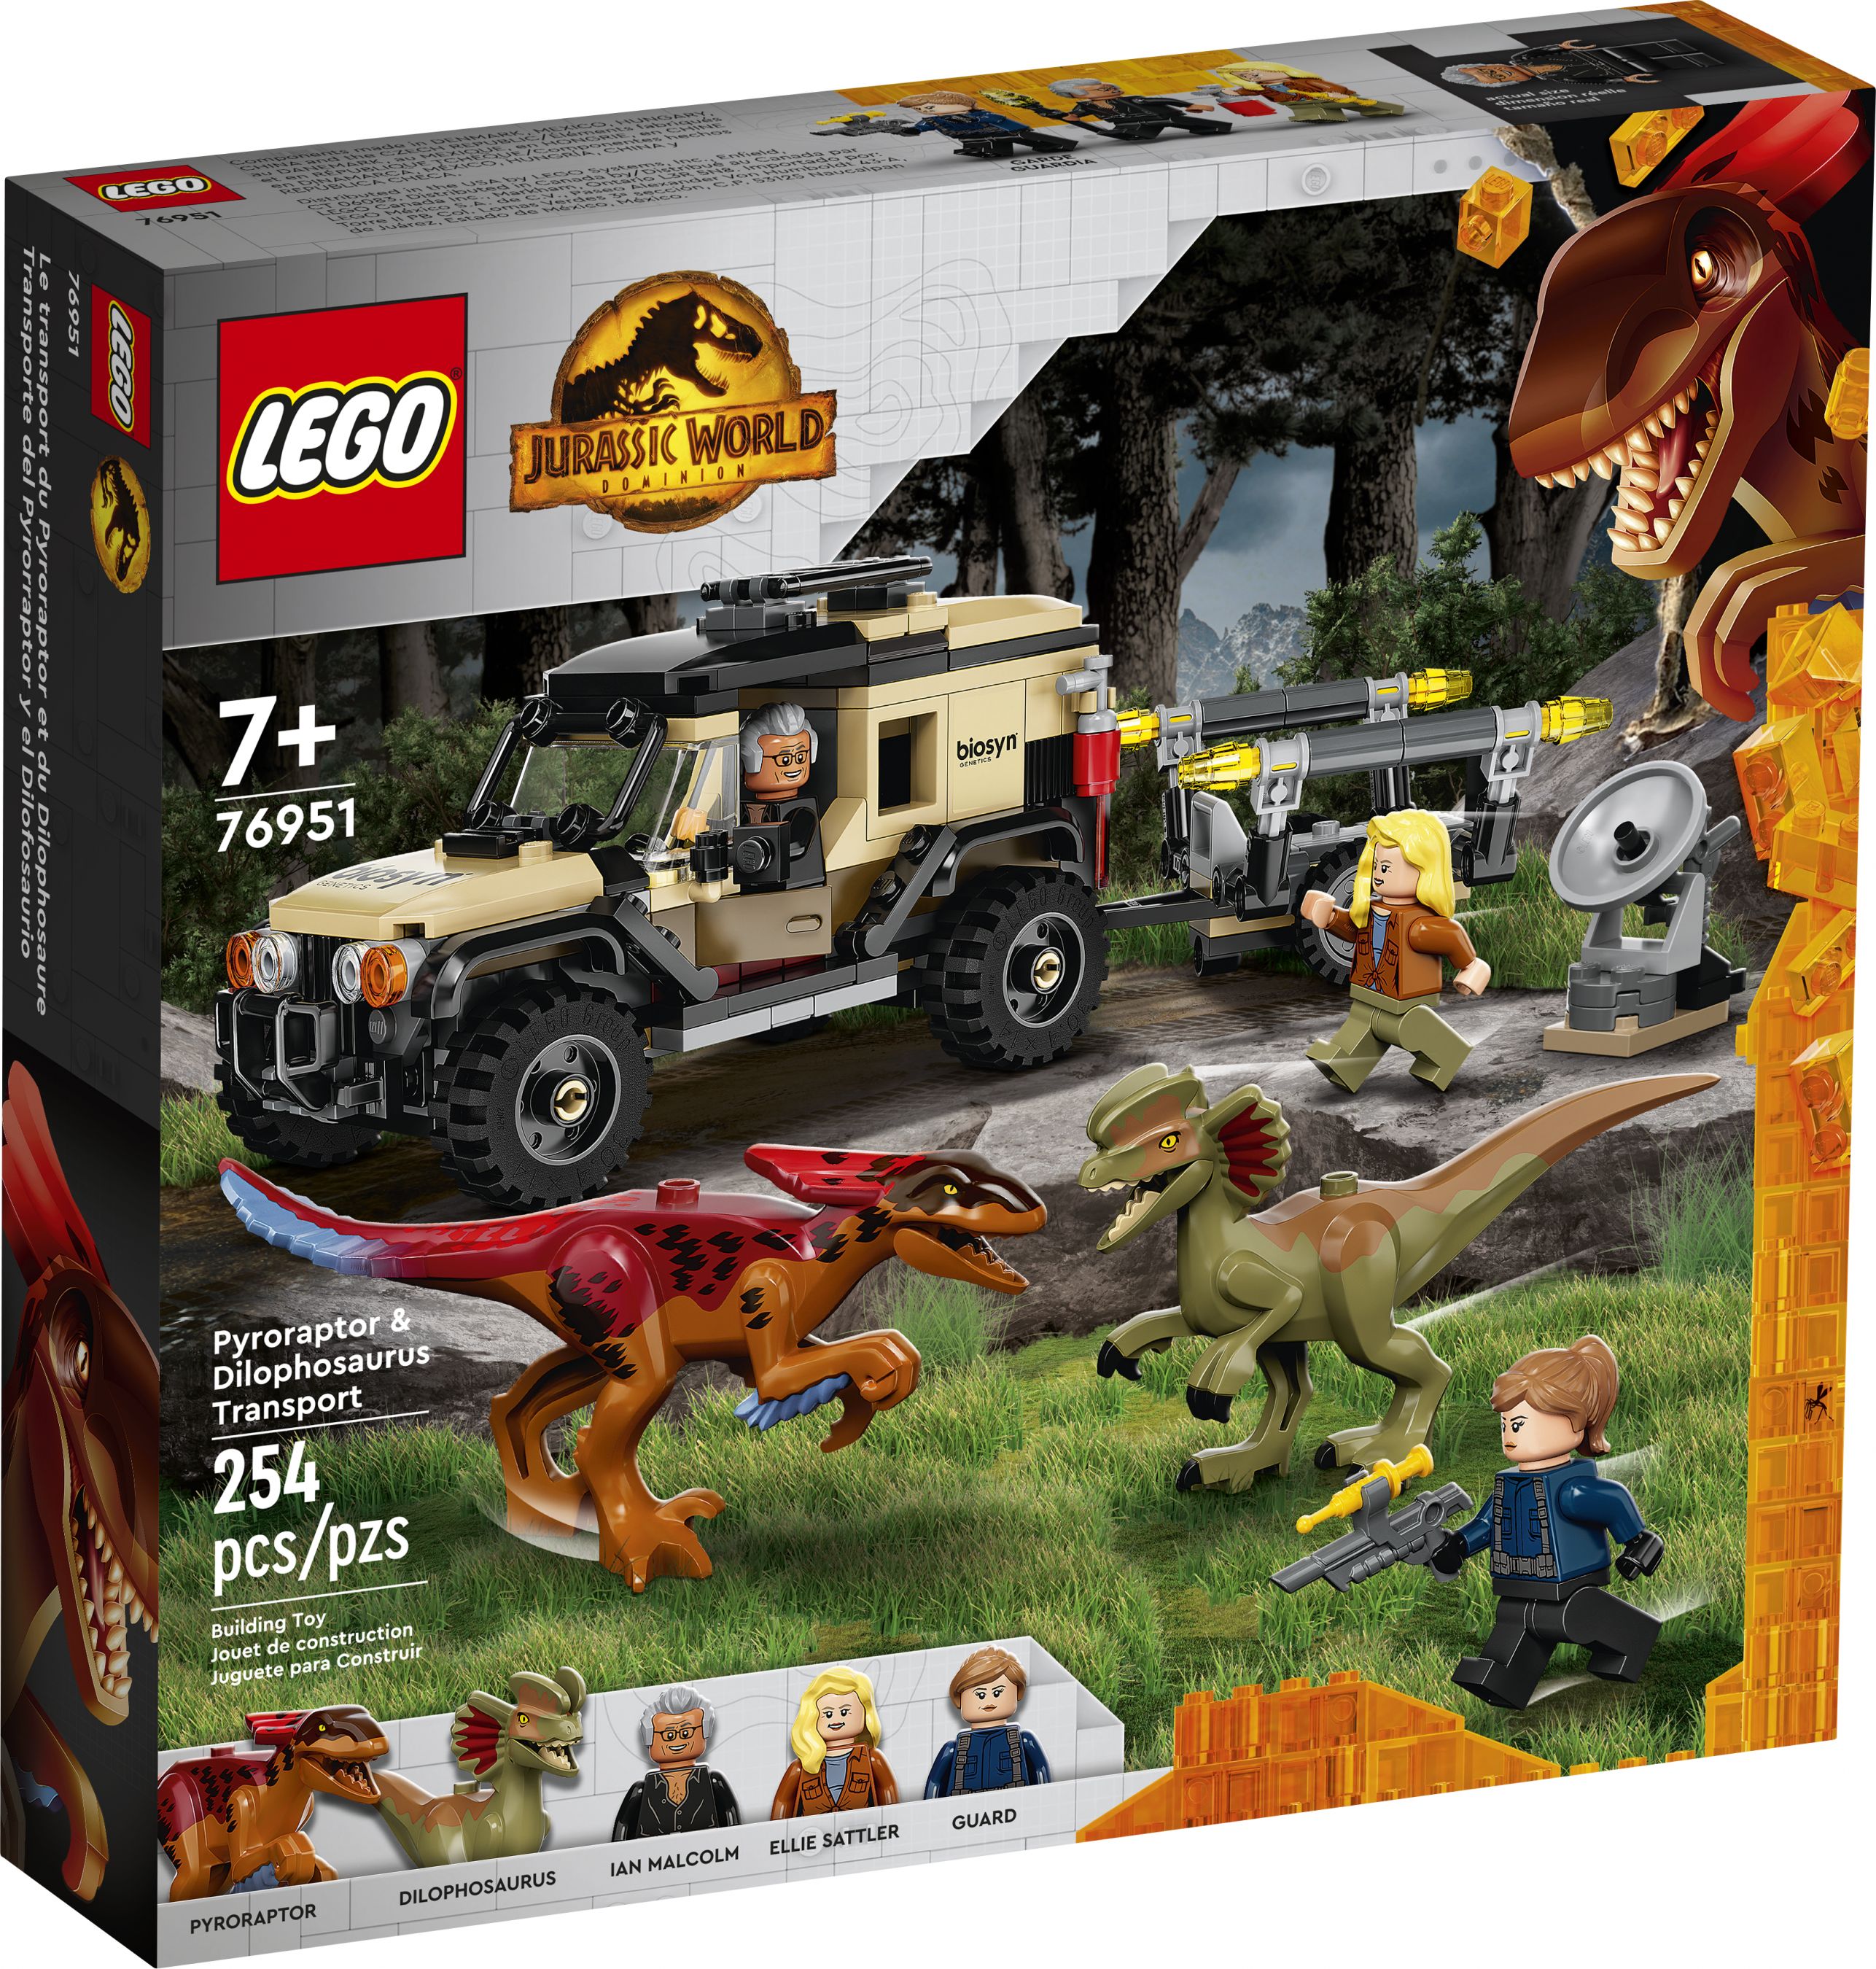 LEGO Jurassic World 76951 Pyroraptor & Dilophosaurus Transport LEGO_76951_Box1_V39.jpg